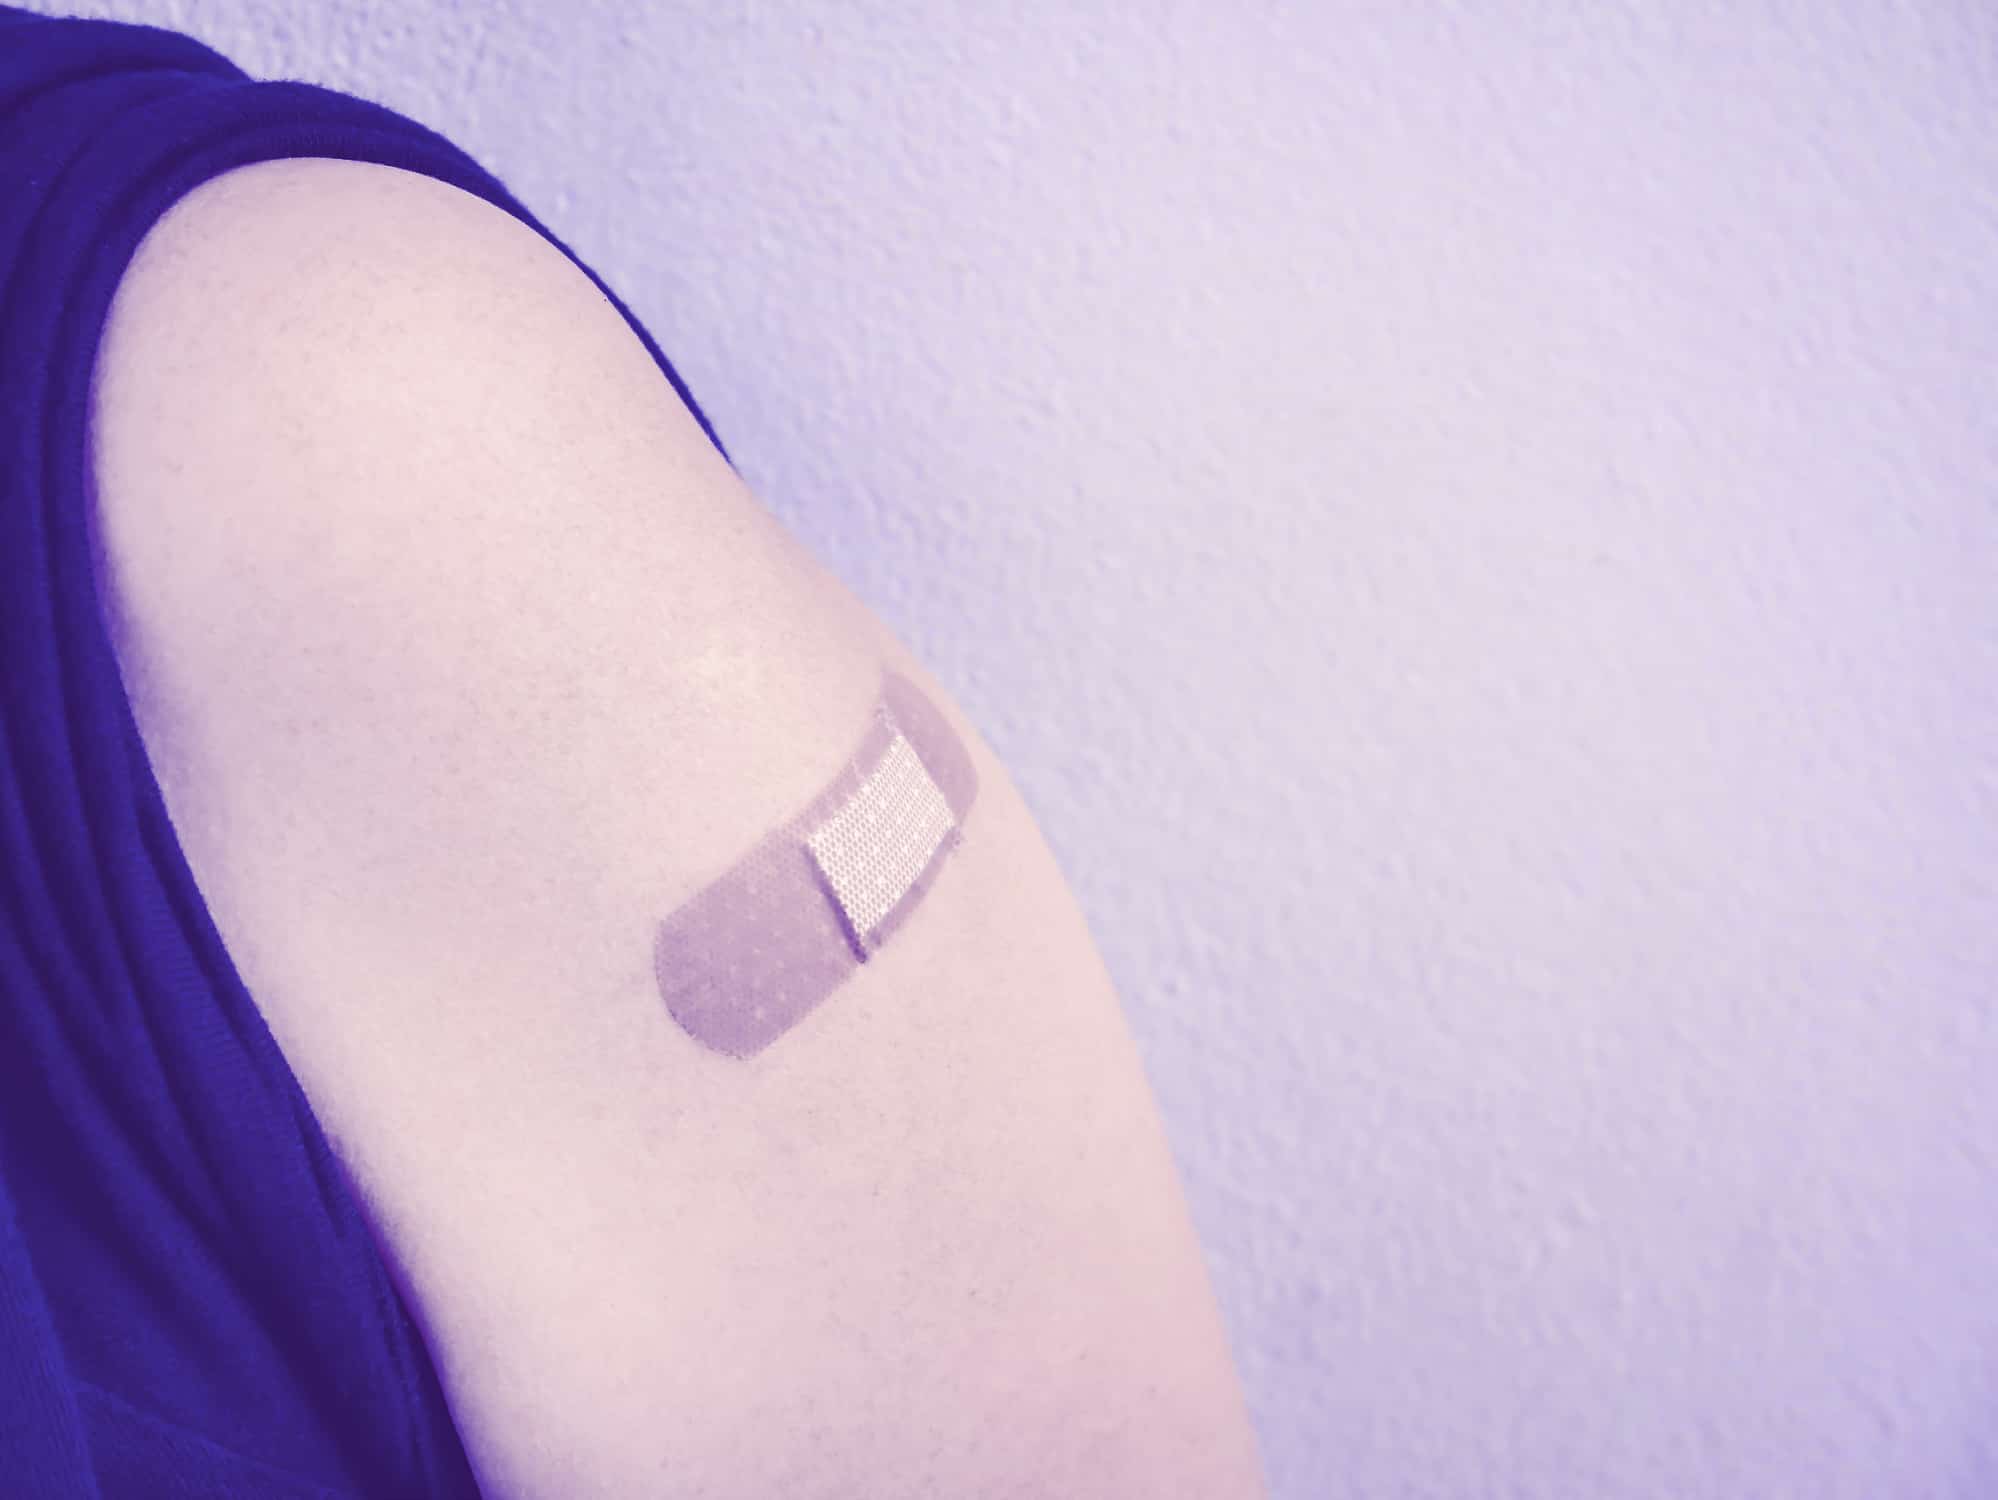 purple-bandaid-vaccine